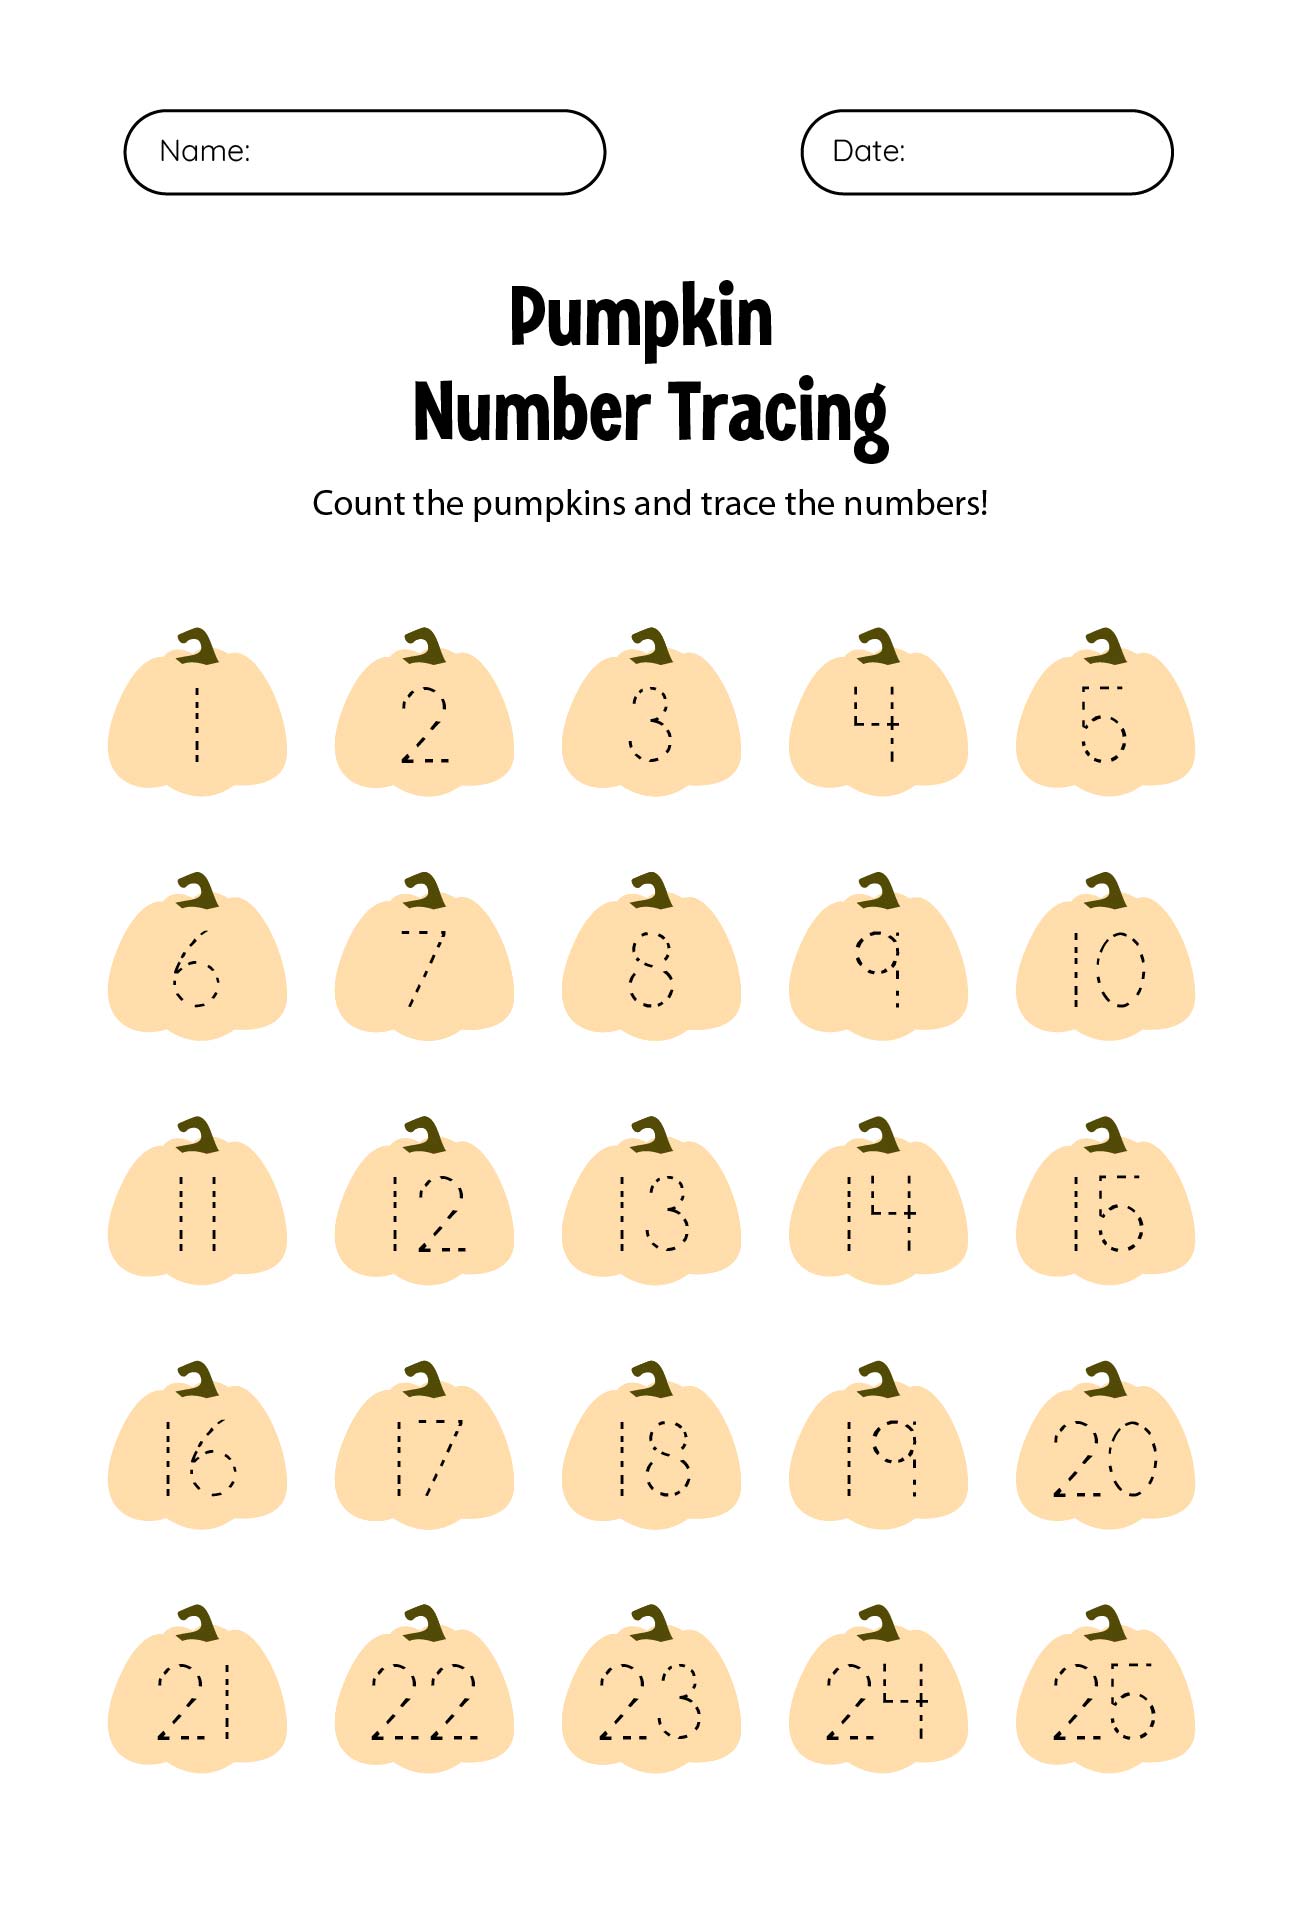 Pumpkin Number Tracing 1-25 Printable